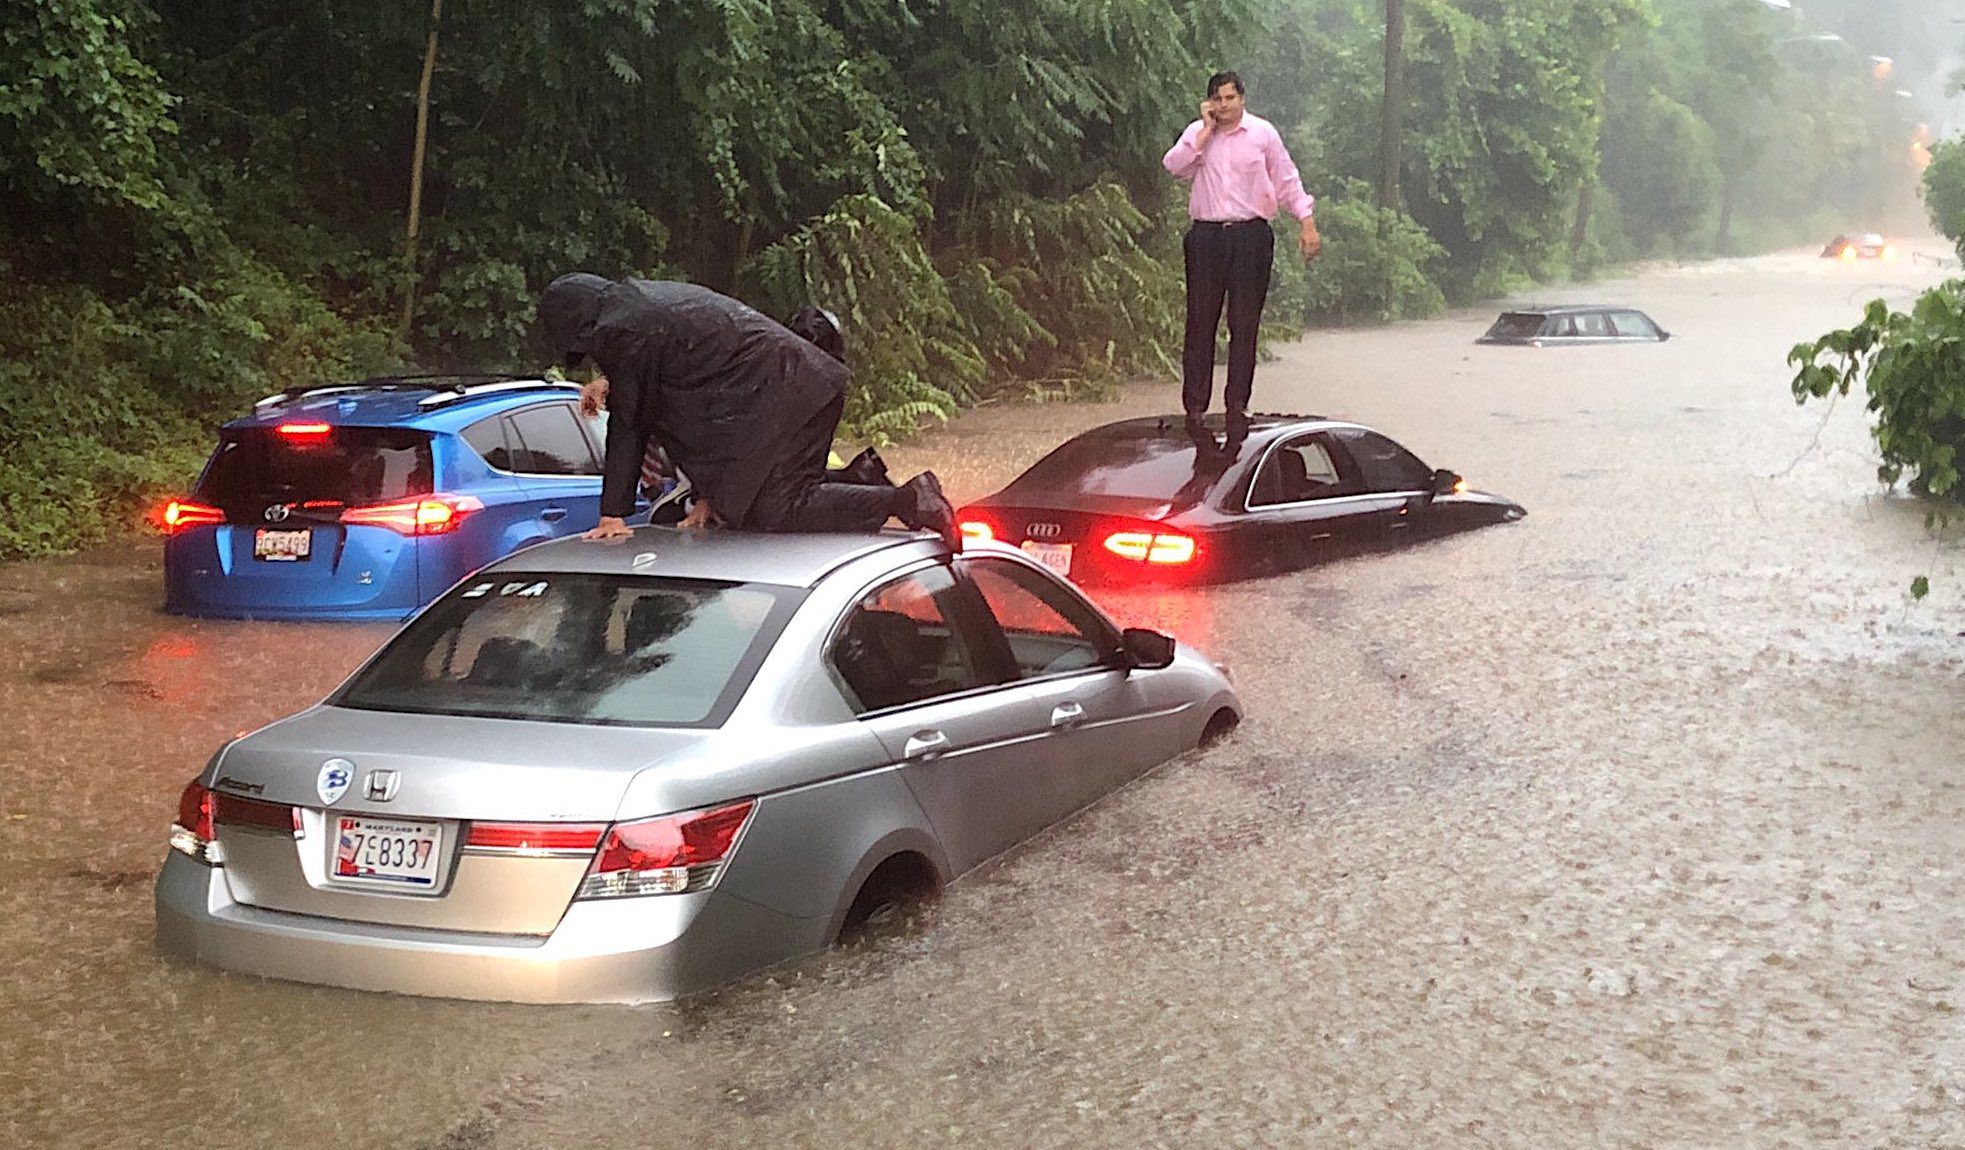 Motorists stranded in flood waters in Washington, D.C